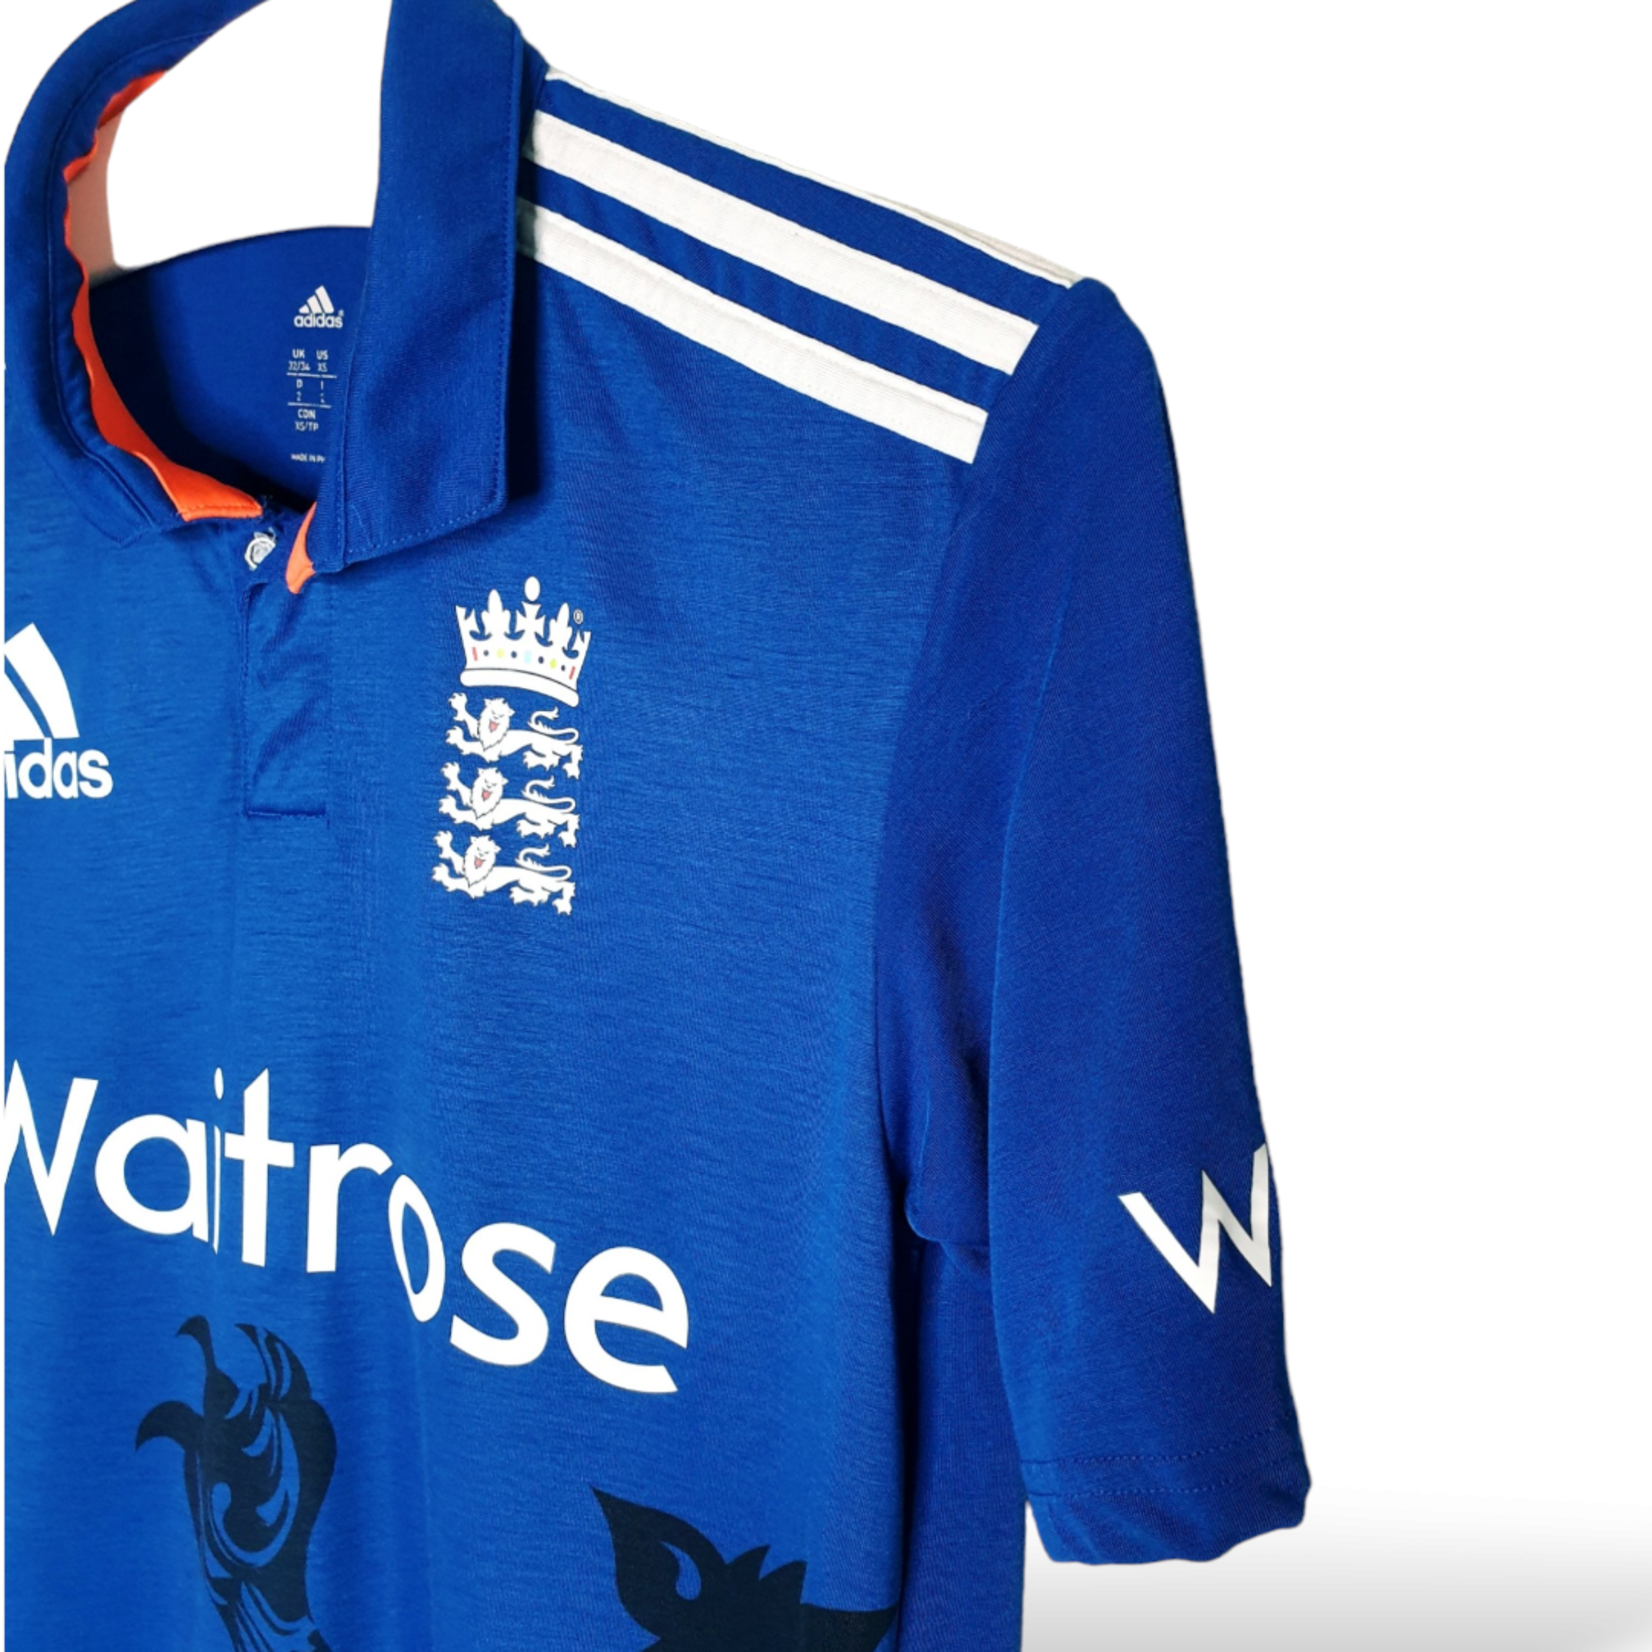 Adidas Origineel Adidas vintage cricket shirt Engeland 2015